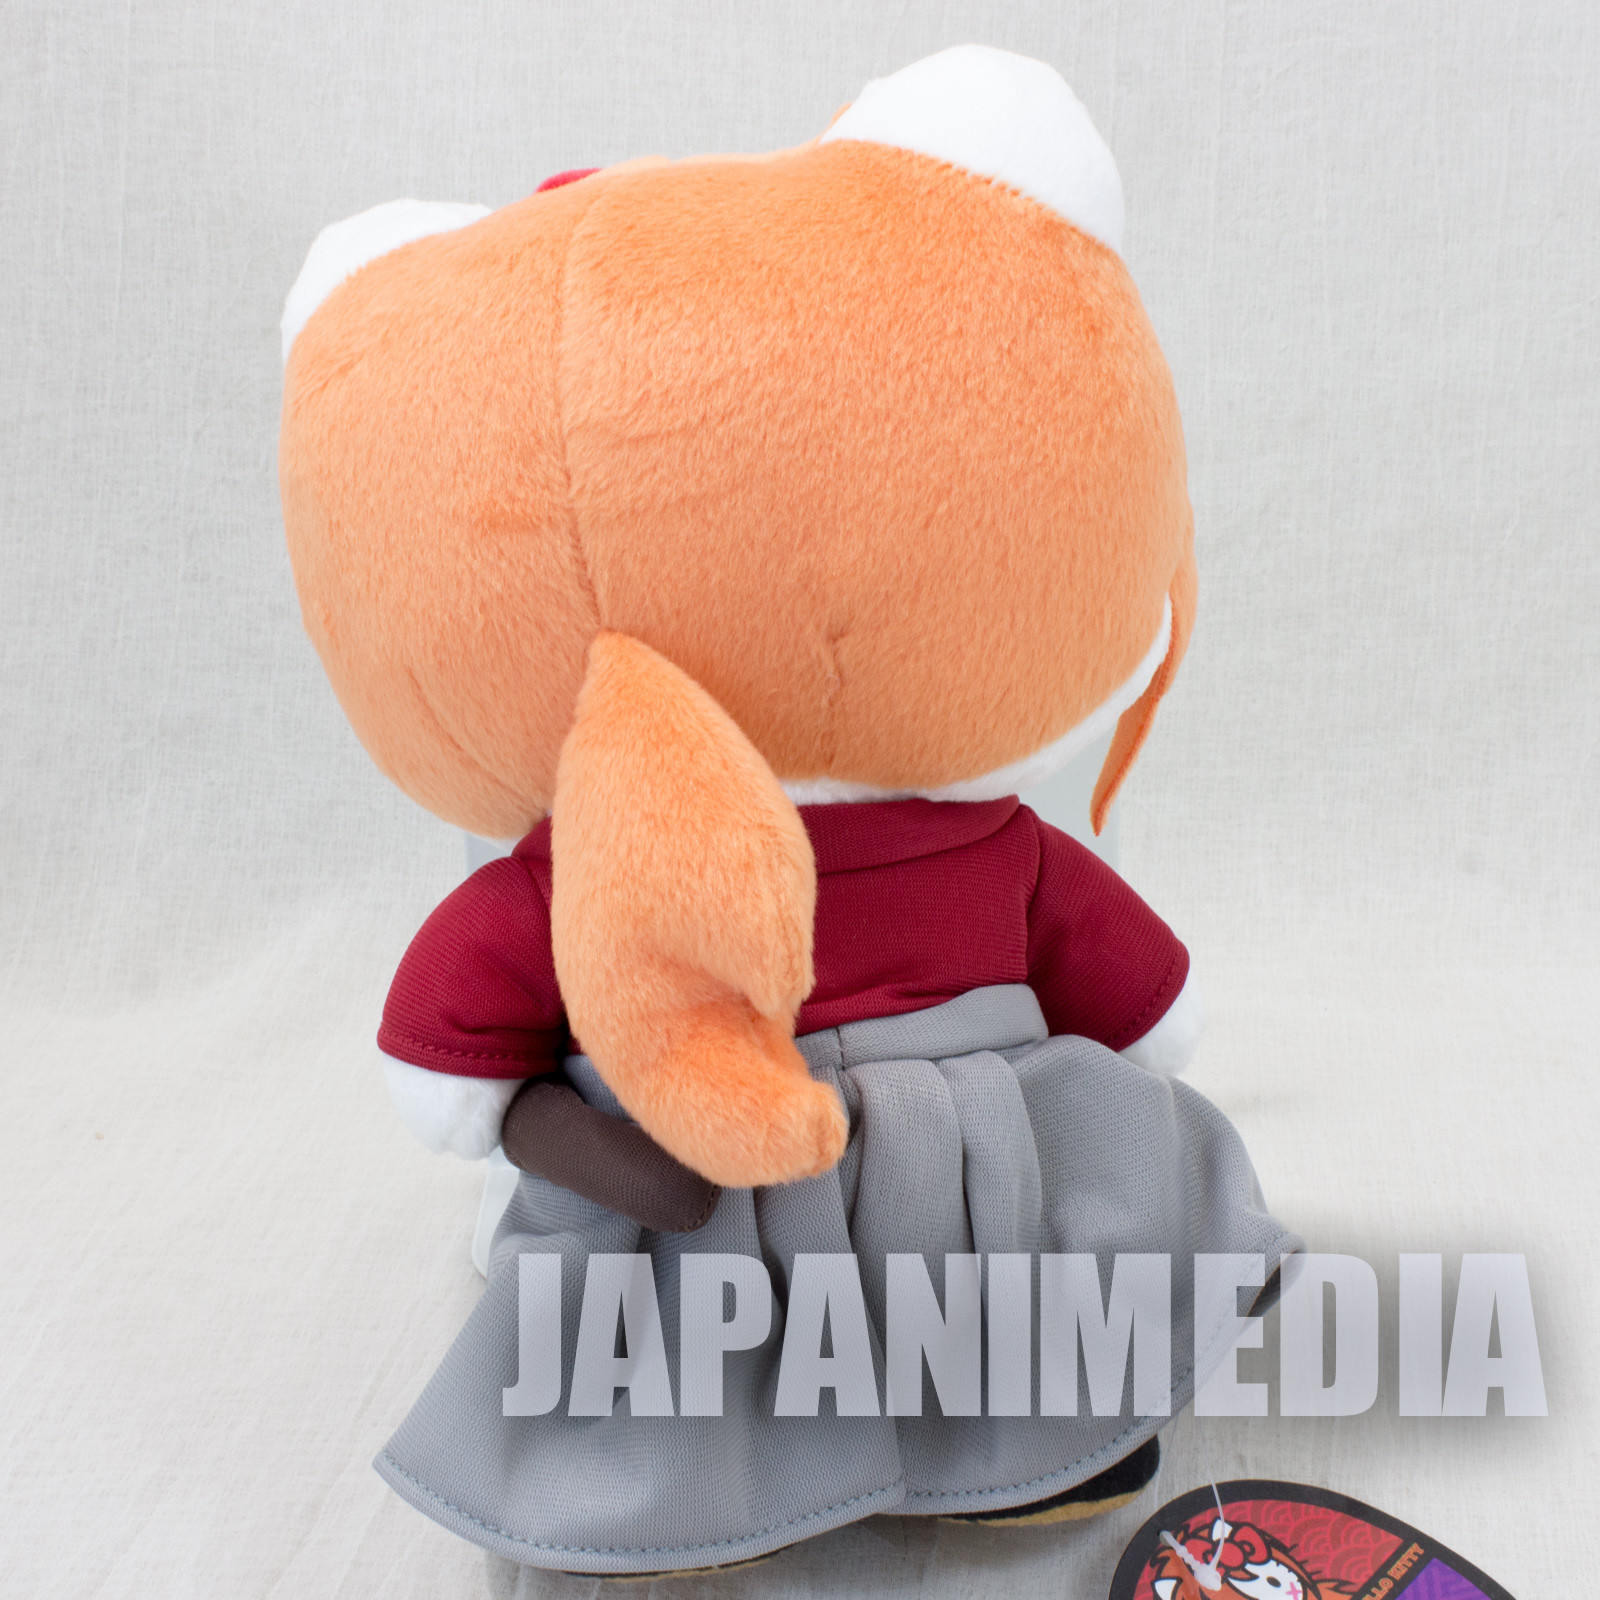 Rurouni Kenshin Himura Kenshin x Hello Kitty Plush Doll 9" JAPAN ANIME MANGA